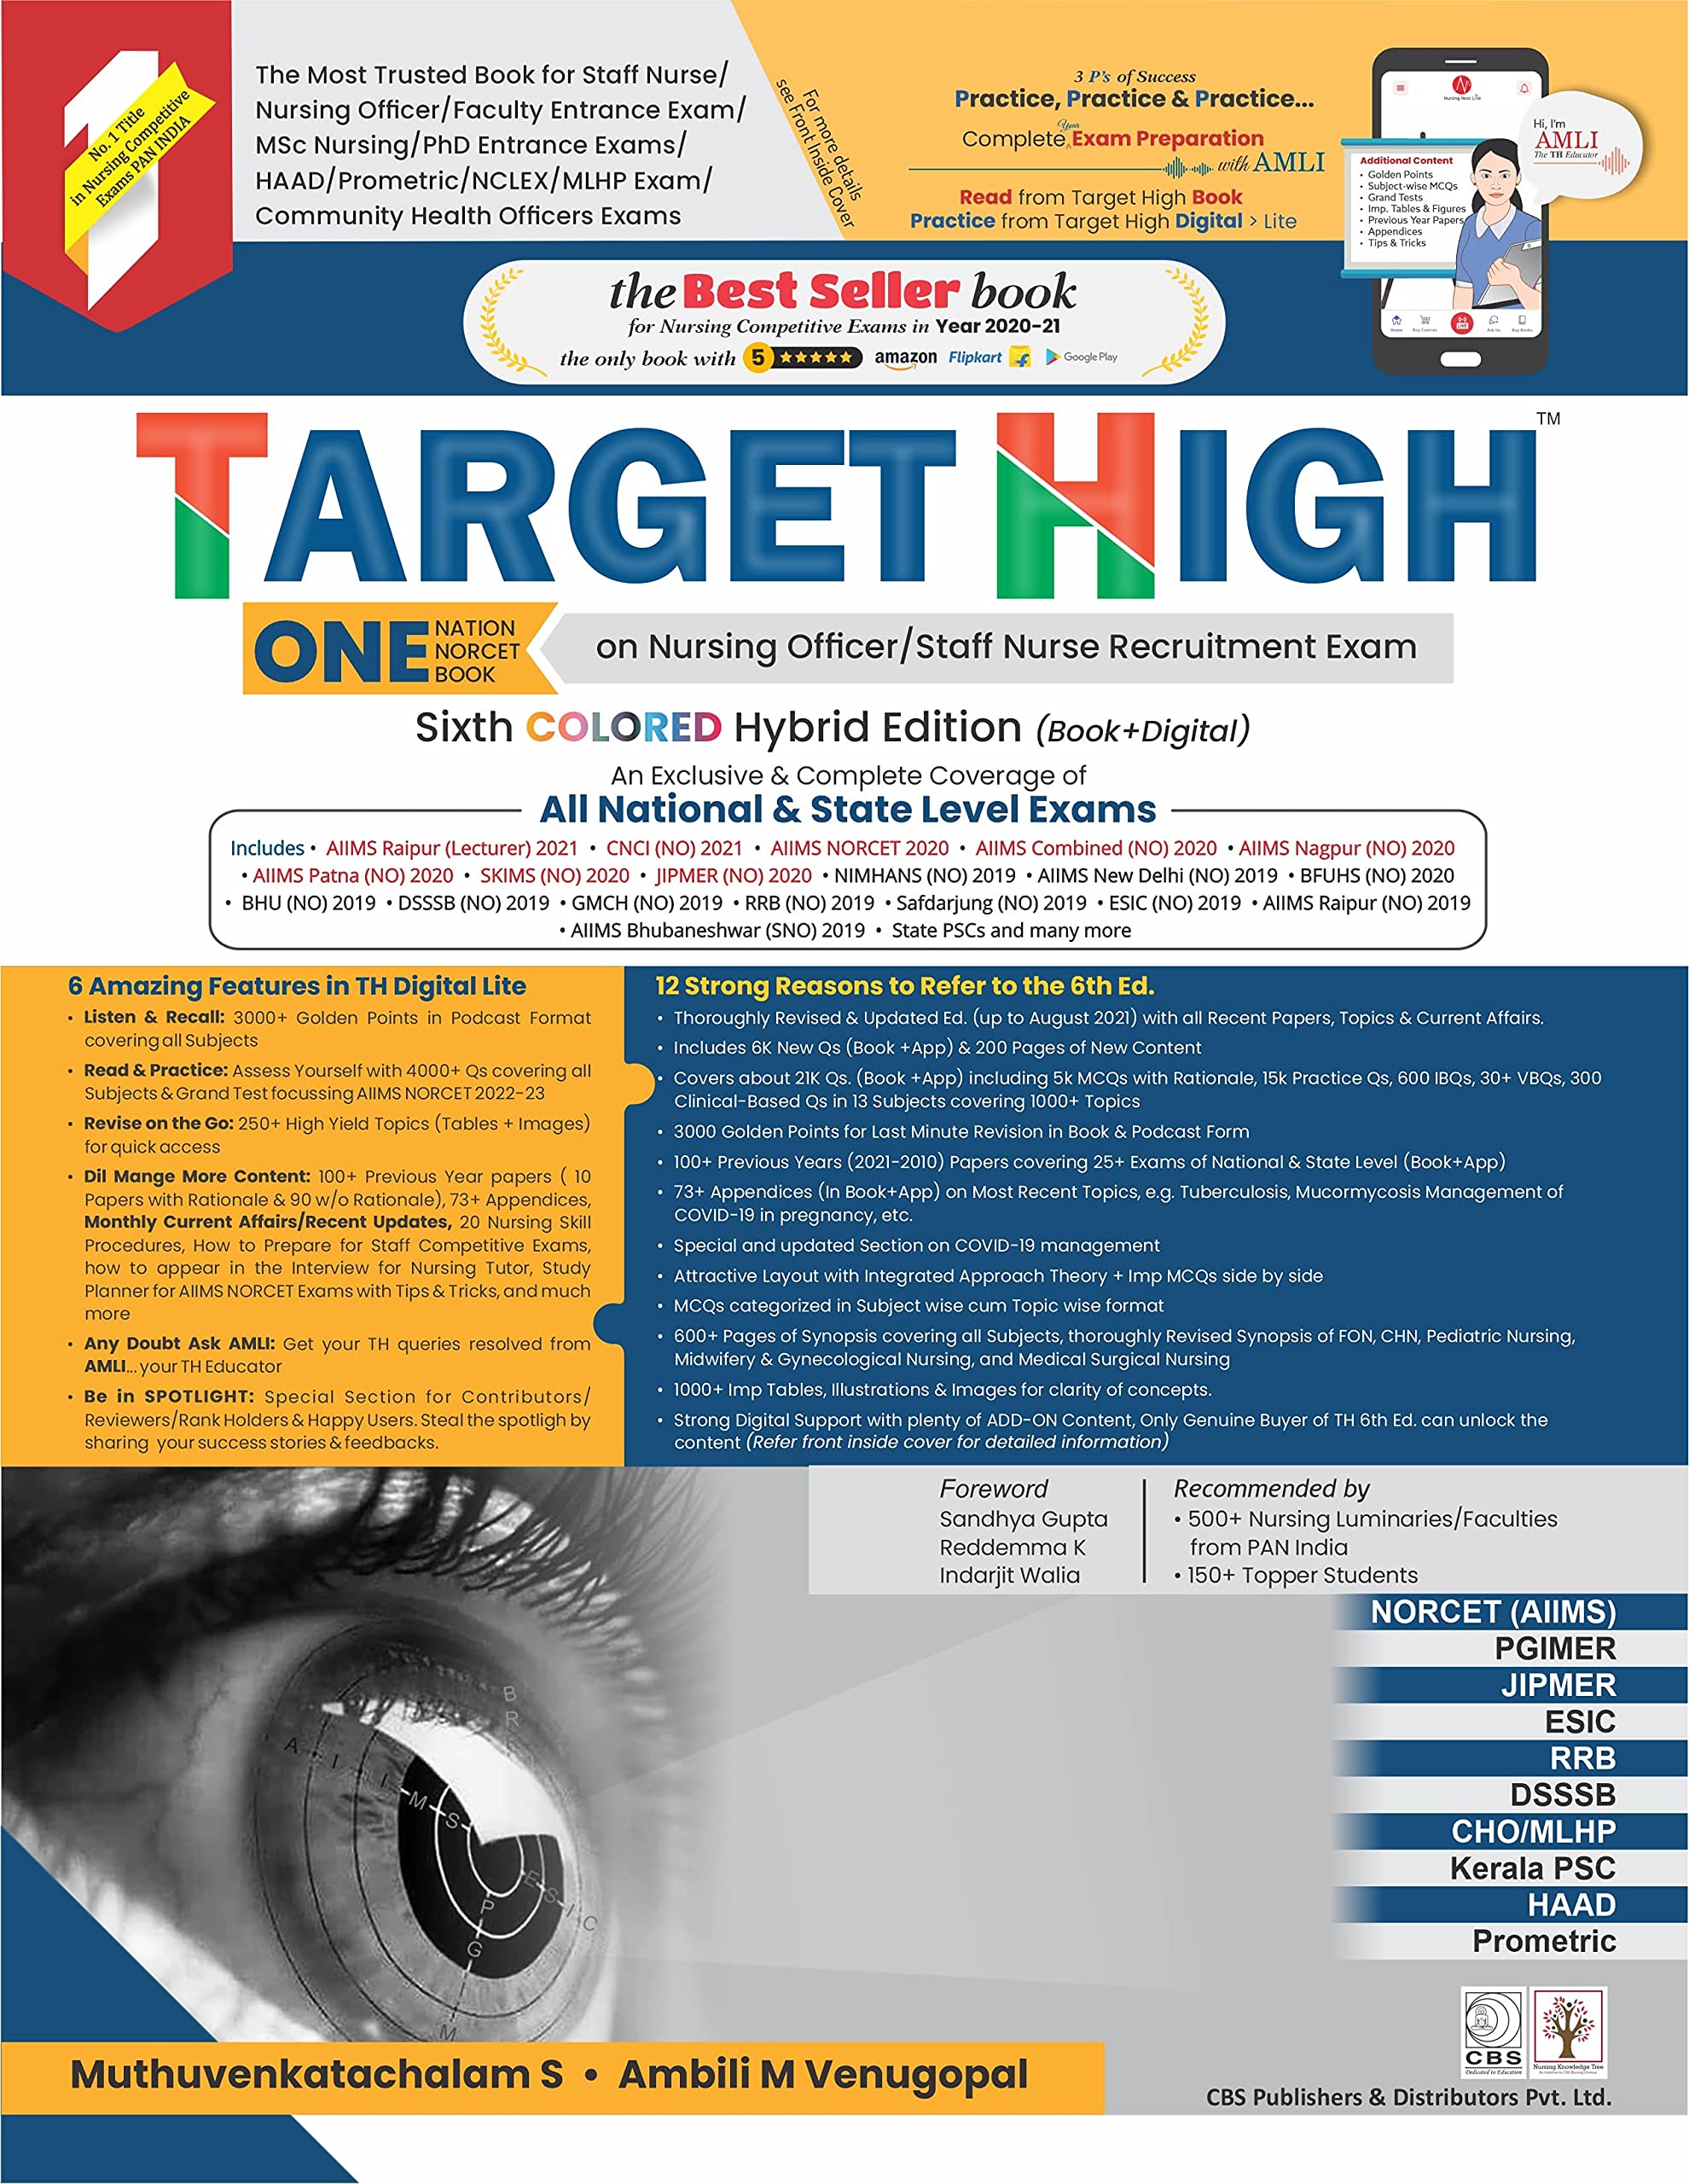 Target High- for Nursing Officer/Staff Nurse Recruitment Exam 6th Premium Edition Paperback 2021 (Hybrid Edition)